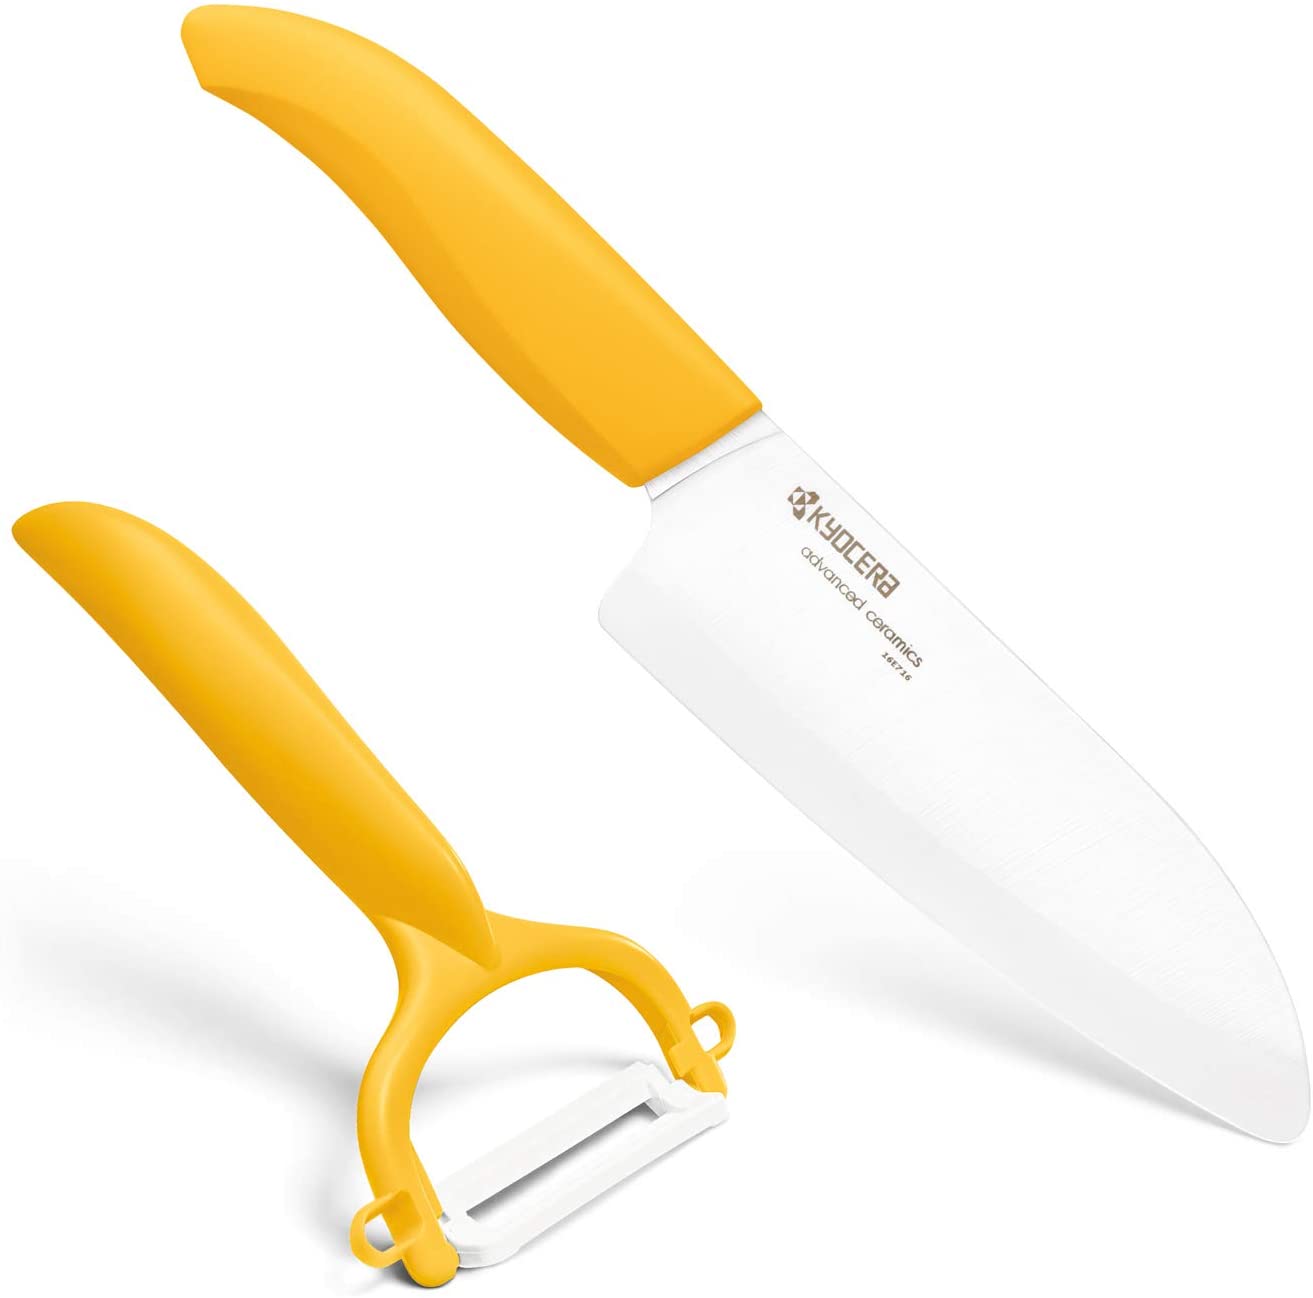 Kyocera Revolution Ceramic Knife and Peeler, 5.5 inch, Yellow